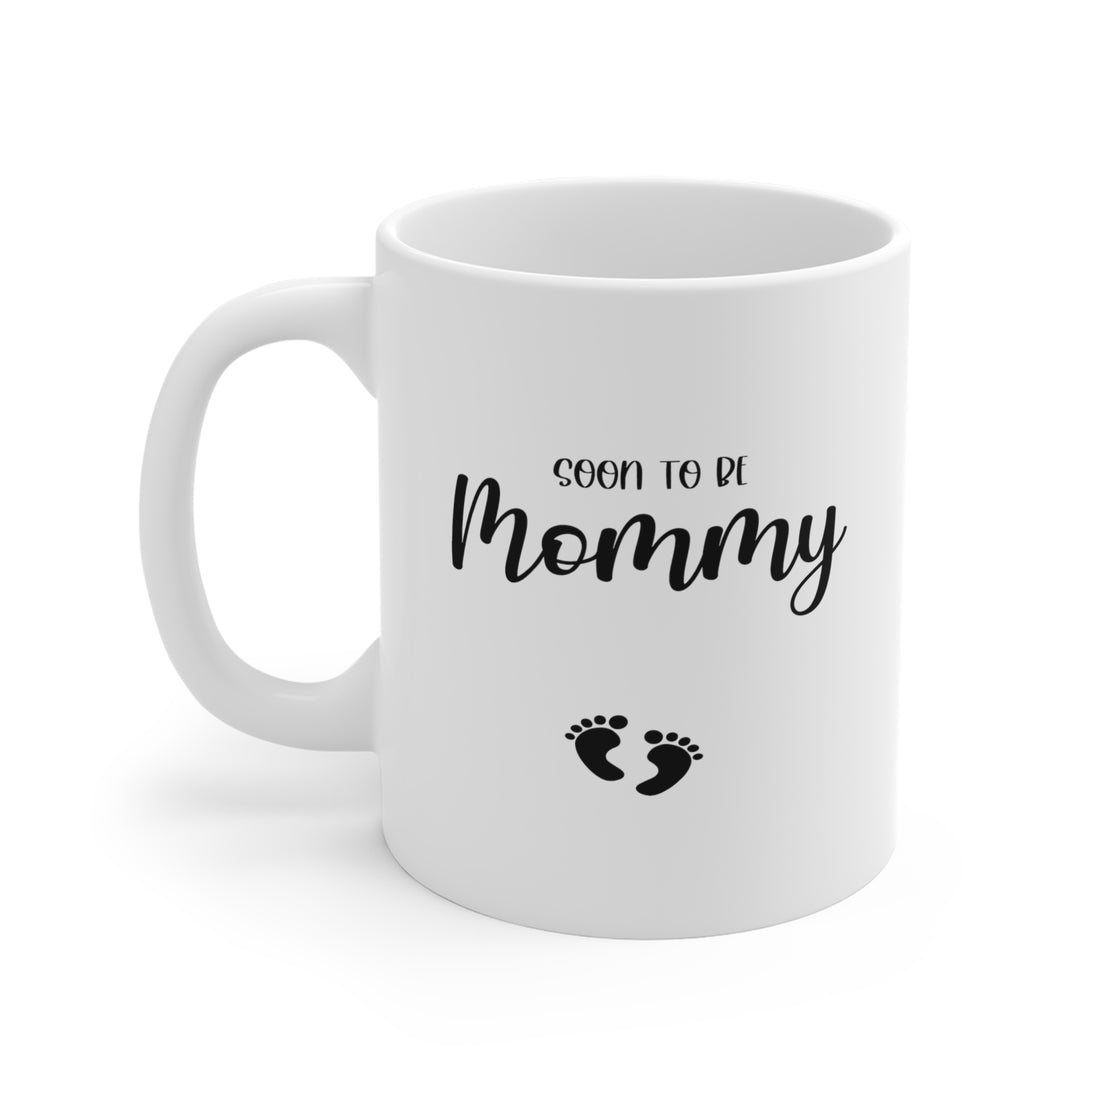 Soon To Be Mommy - White Ceramic Mug 2 sizes Available